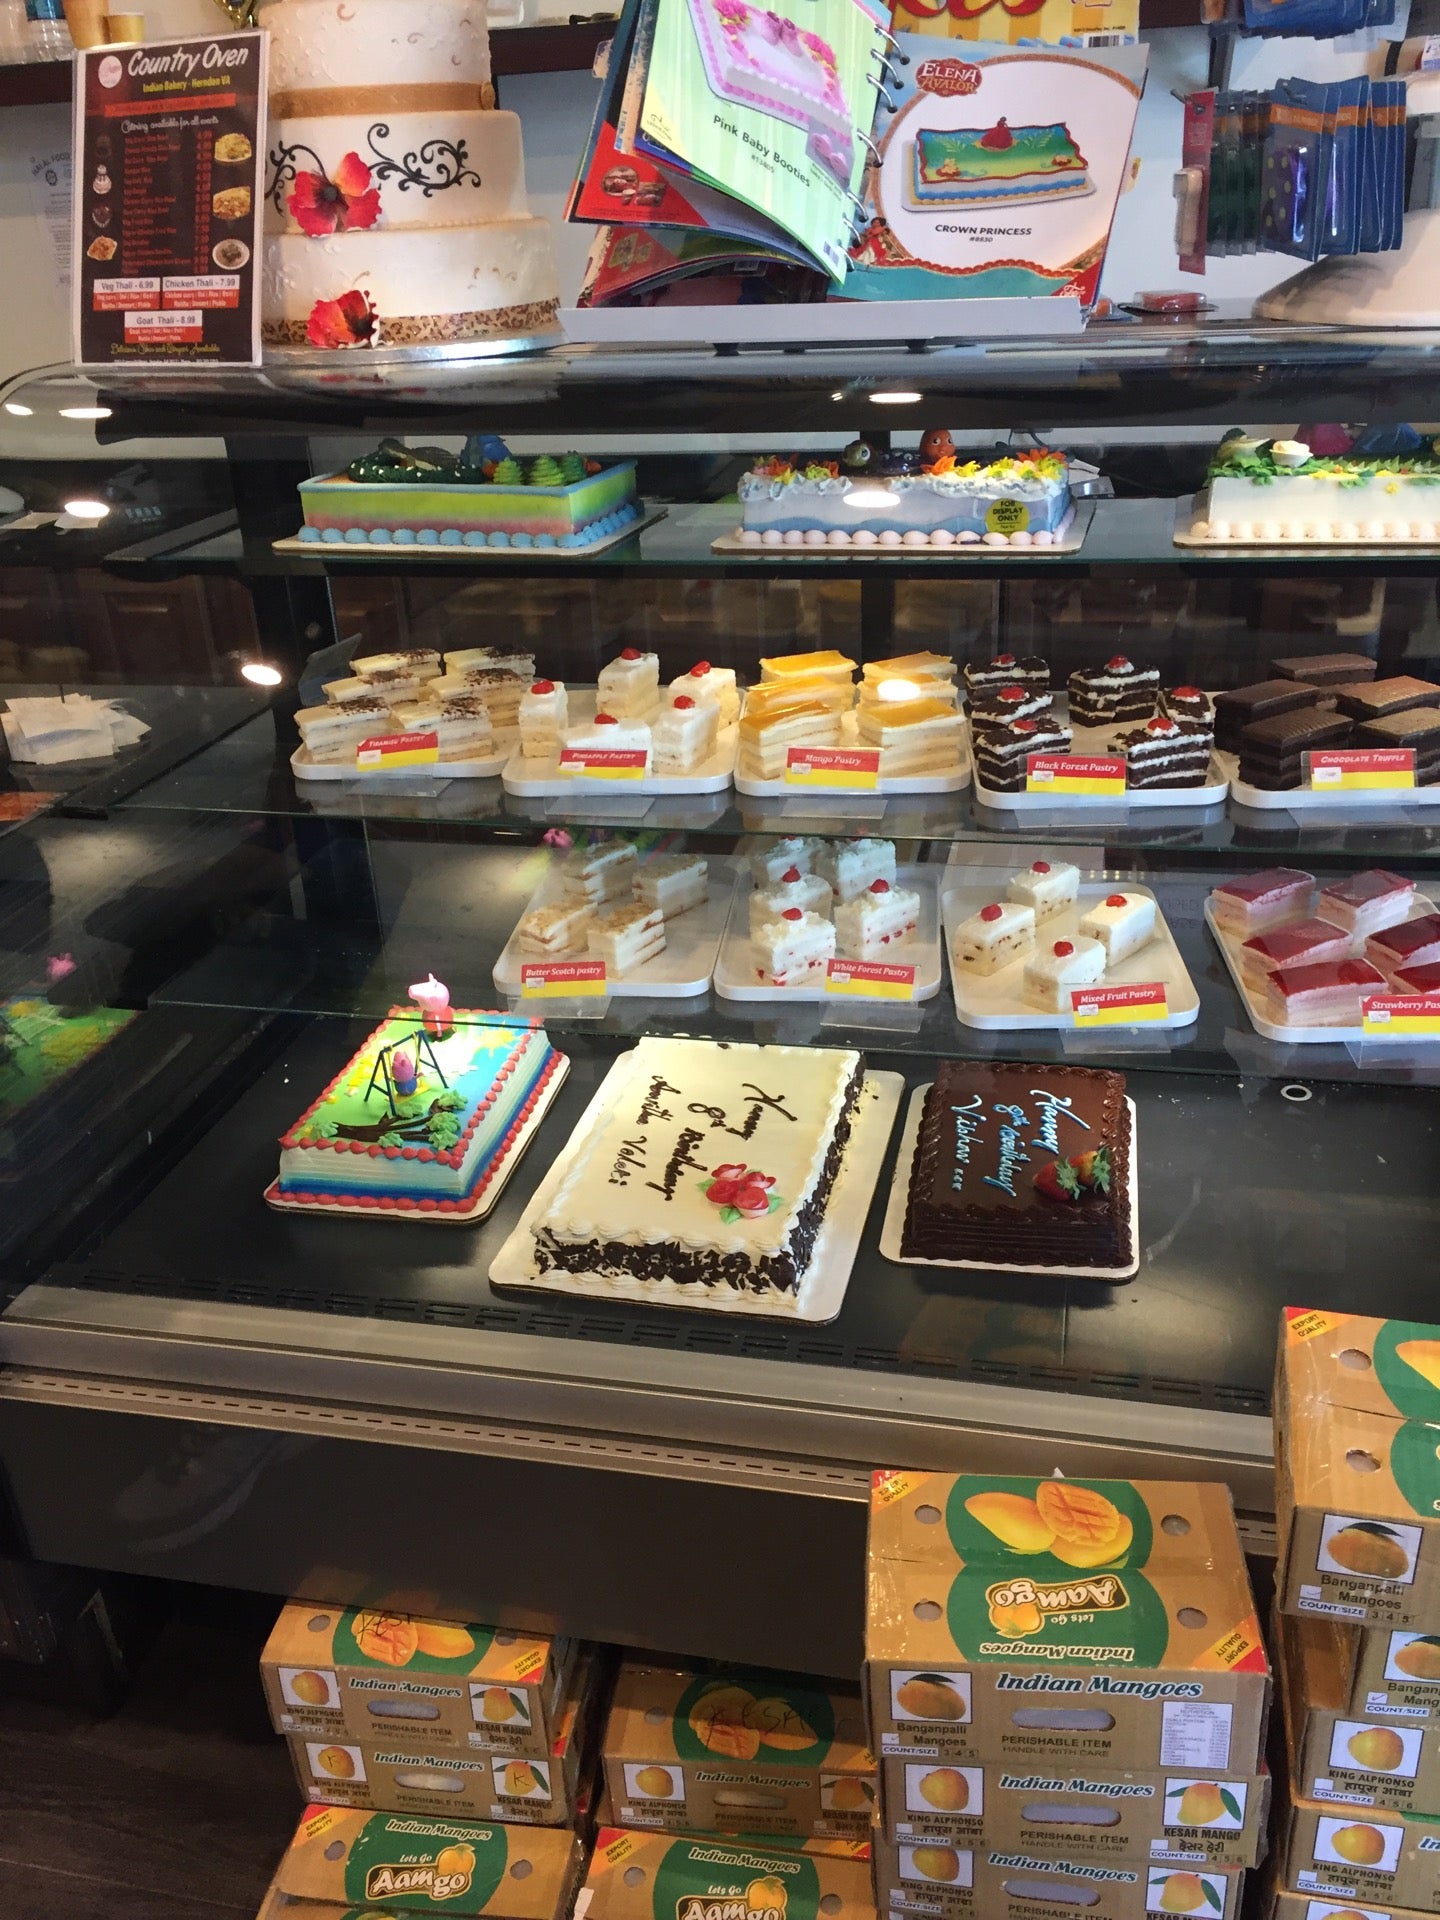 Sonic Birthday Cake - Grandma's Country Oven Bake Shoppe